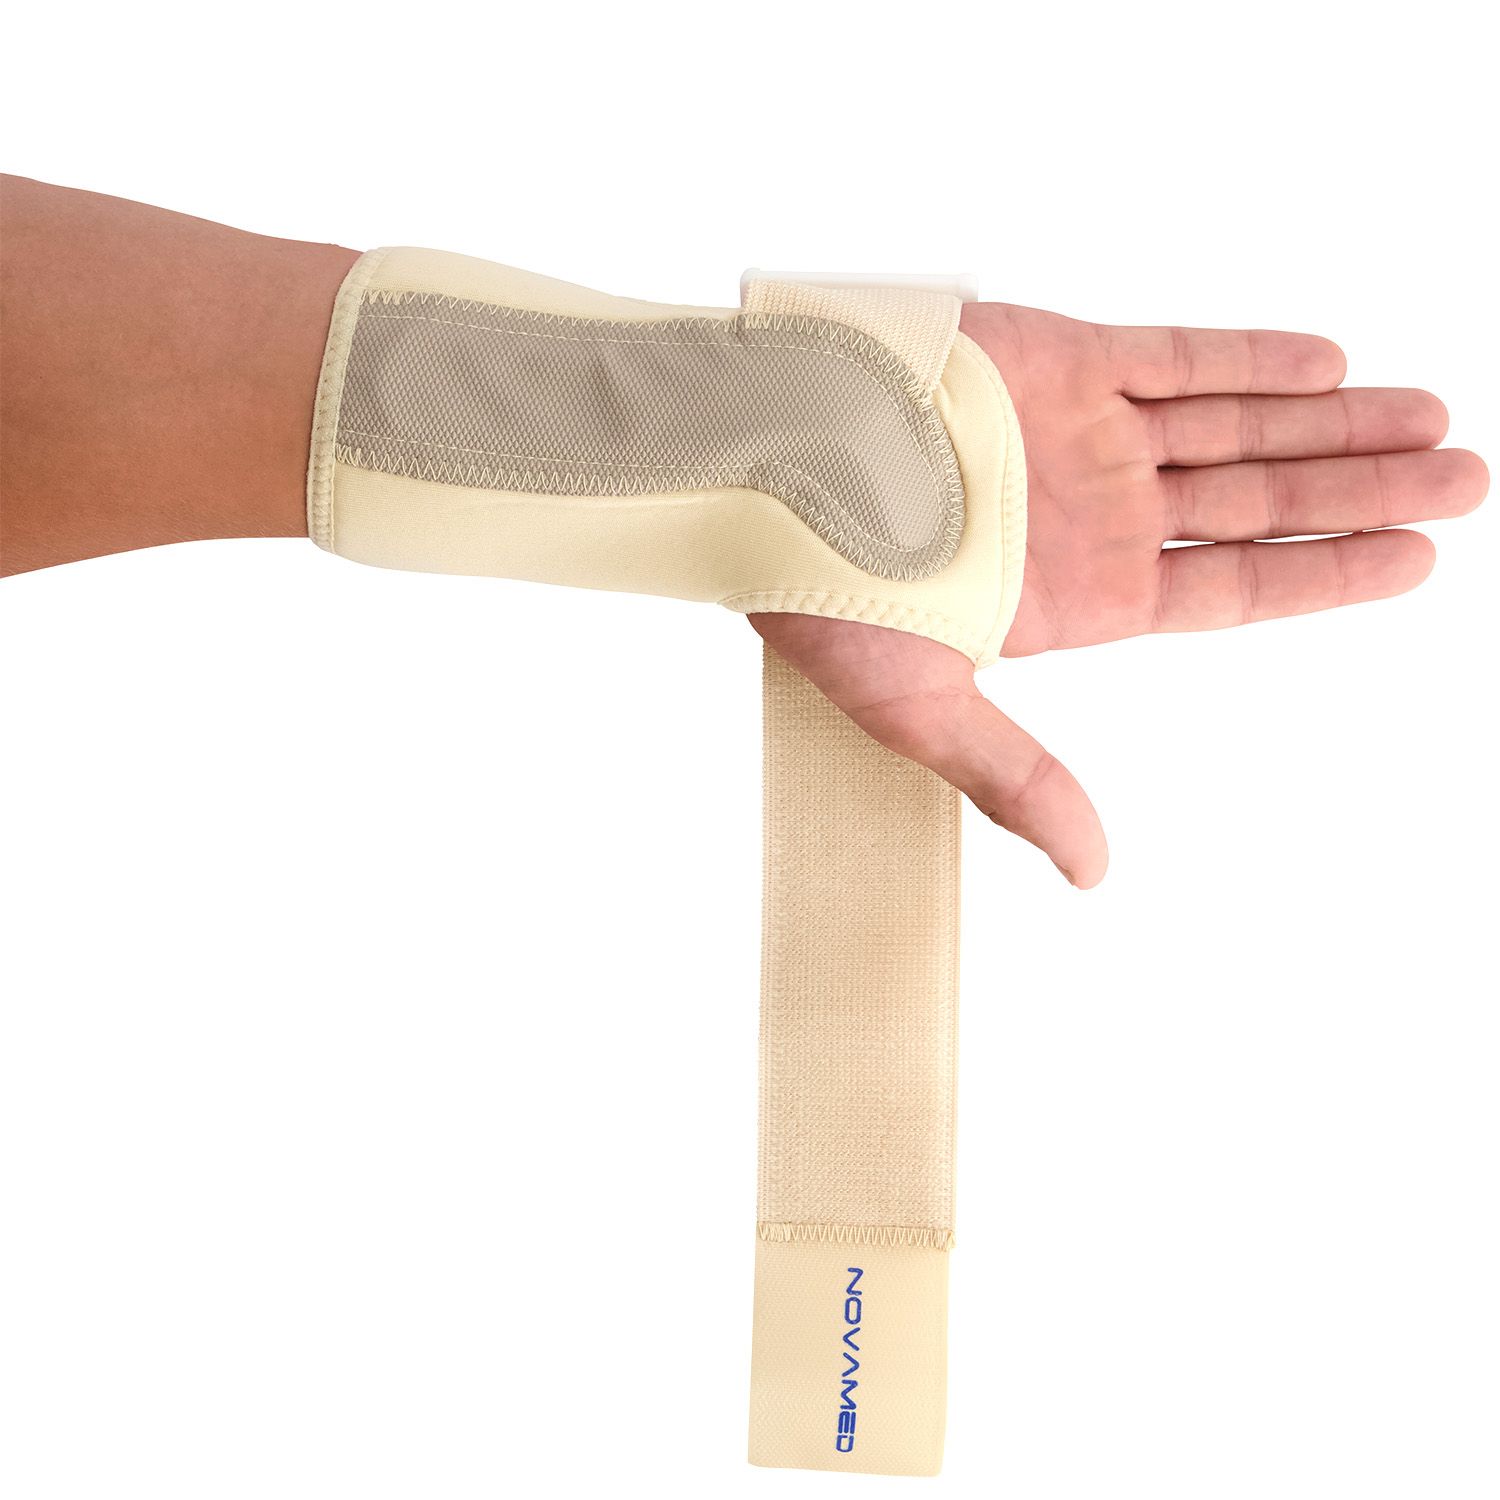 novamed lightweight wrist support with strap